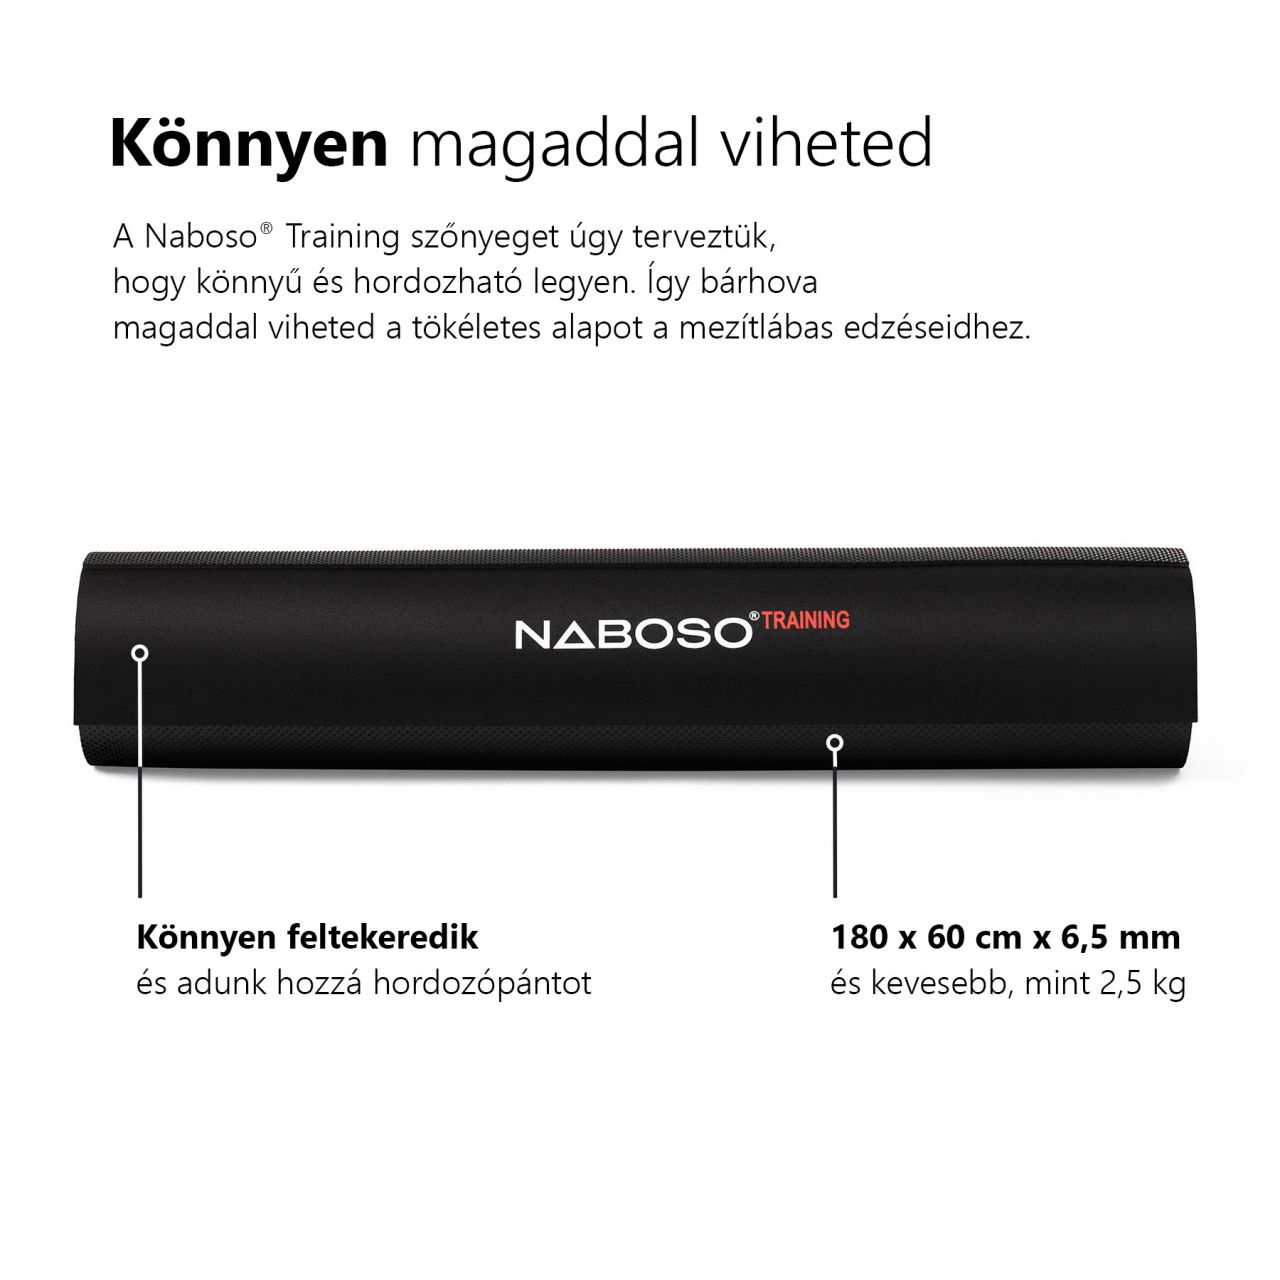 NABOSO Training edző szőnyeg + NABOSO Sensory Stick csomag